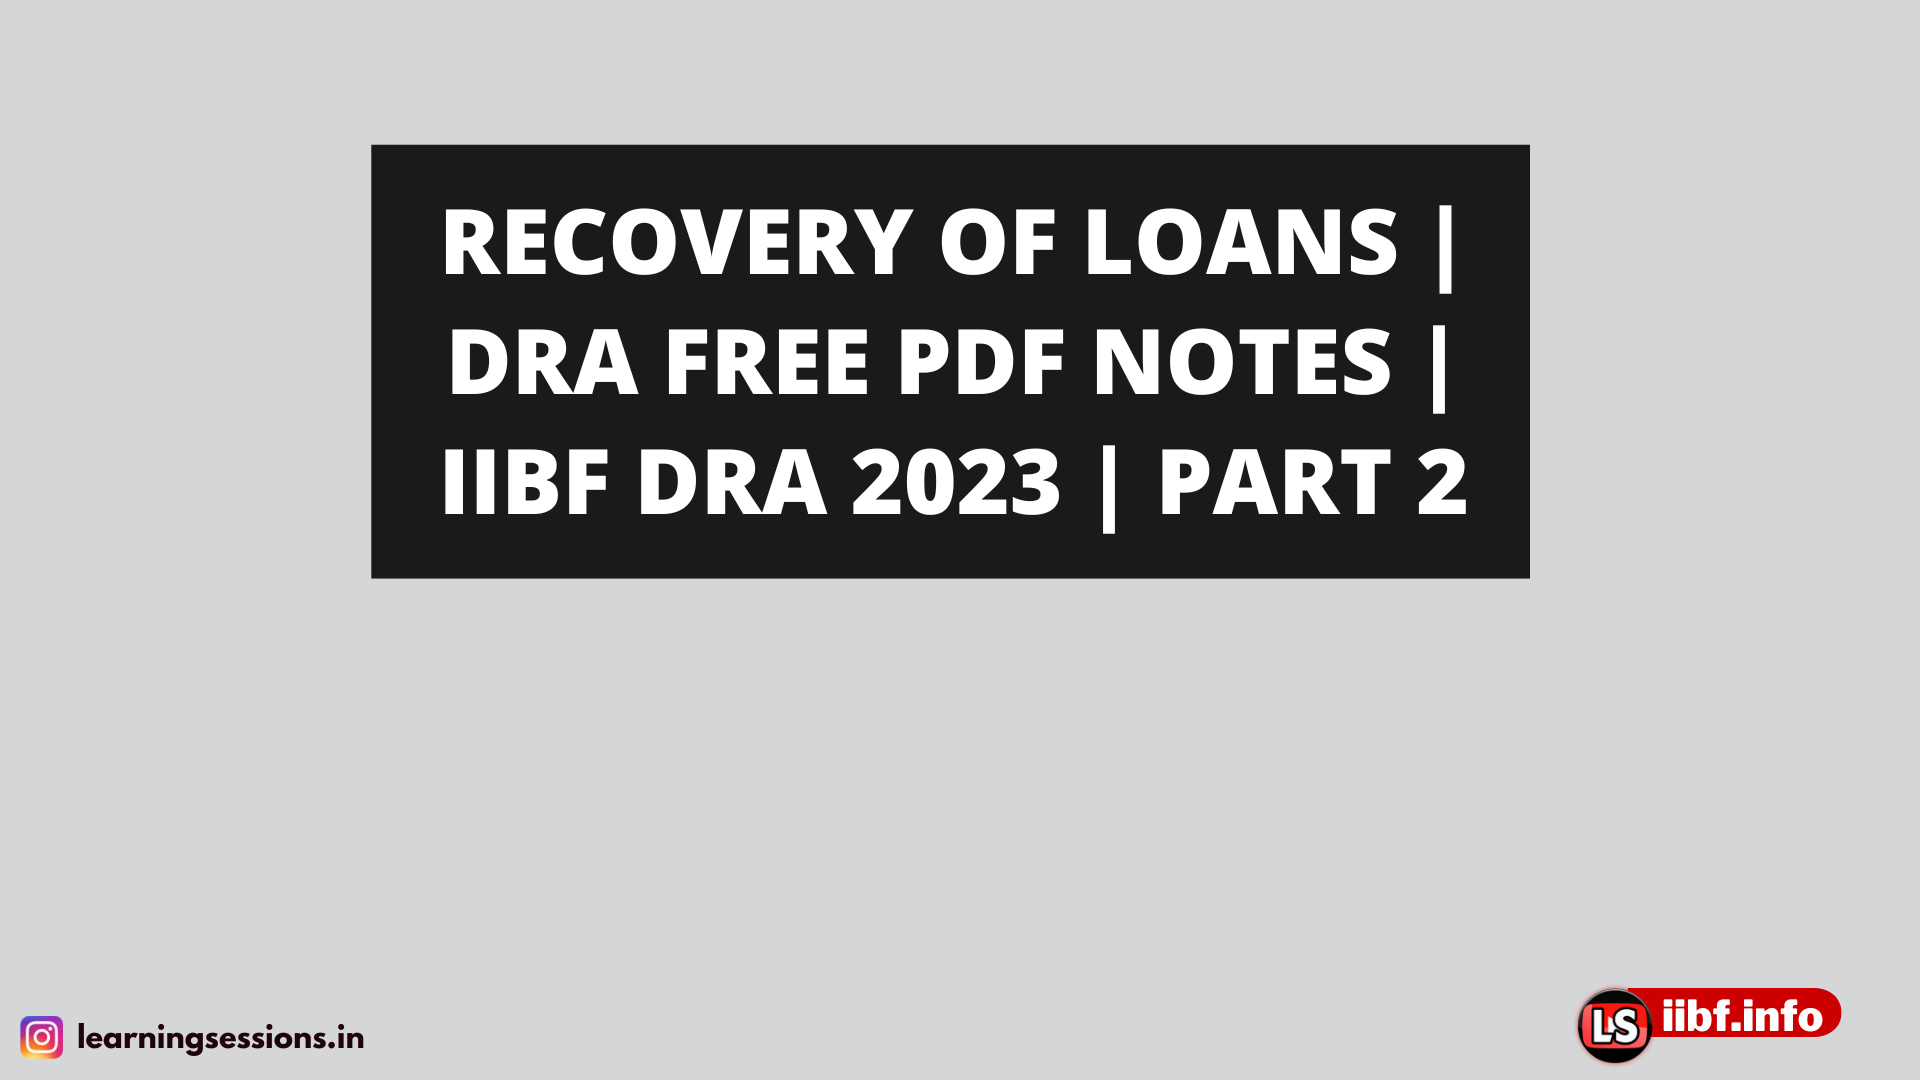 RECOVERY OF LOANS | DRA FREE PDF NOTES | IIBF DRA 2023 | PART 2